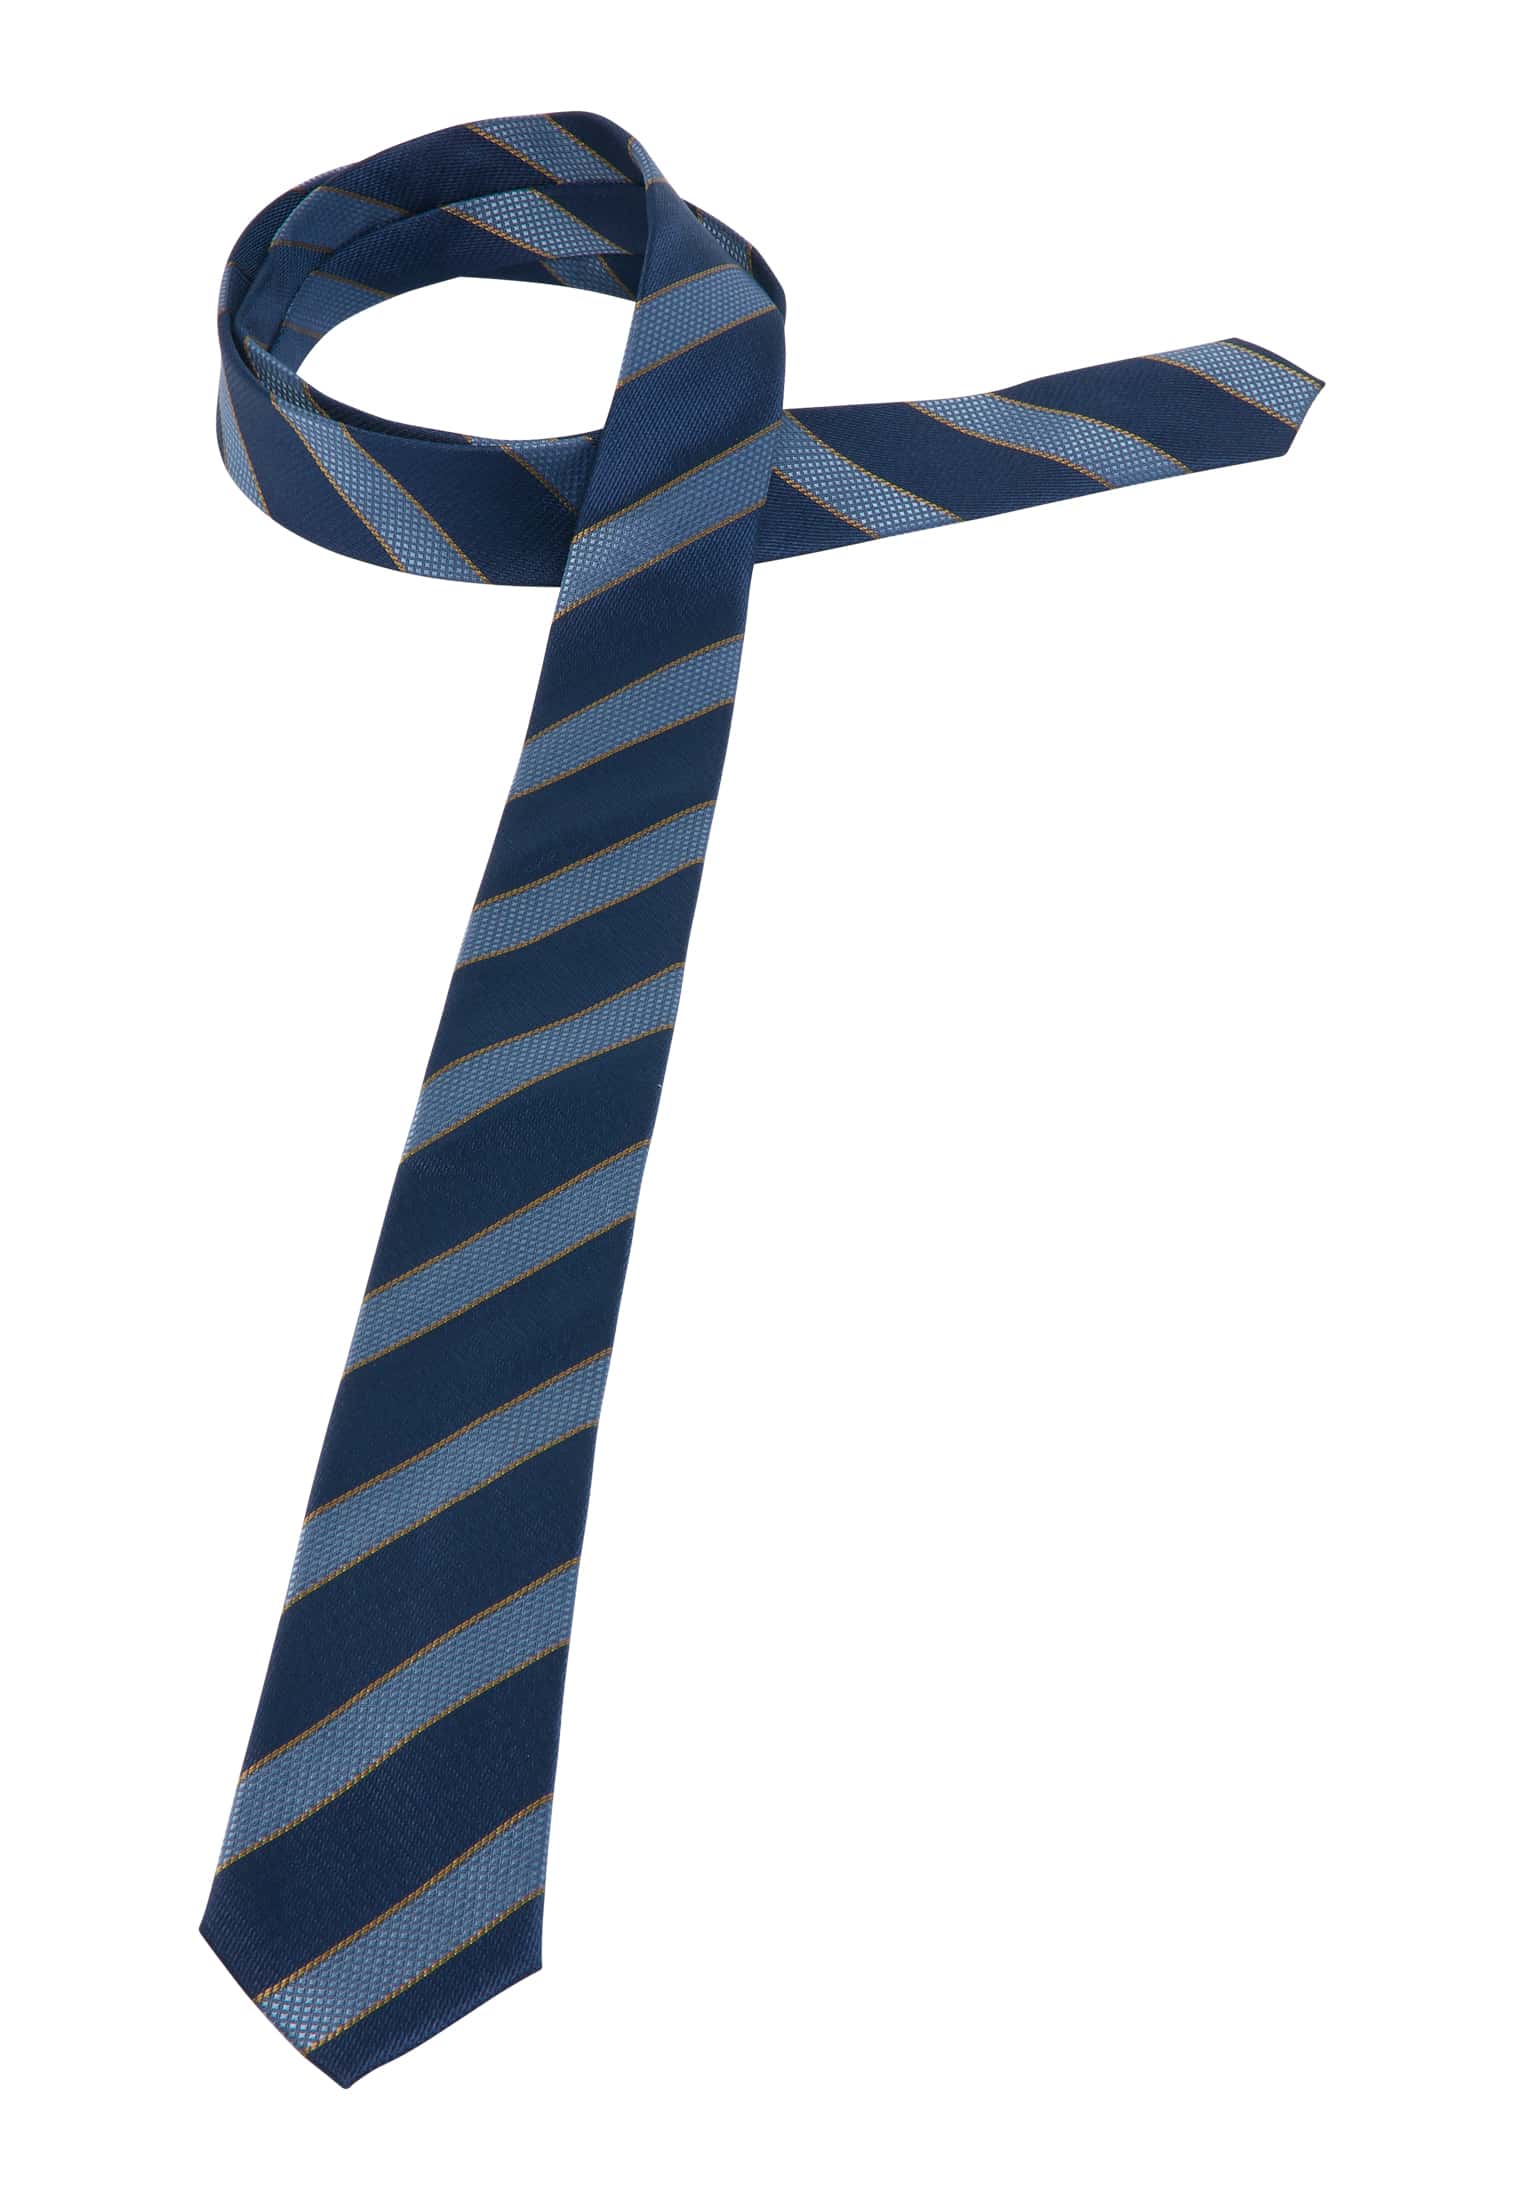 Krawatte in dunkelblau gestreift | dunkelblau | 142 | 1AC01898-01-81-142